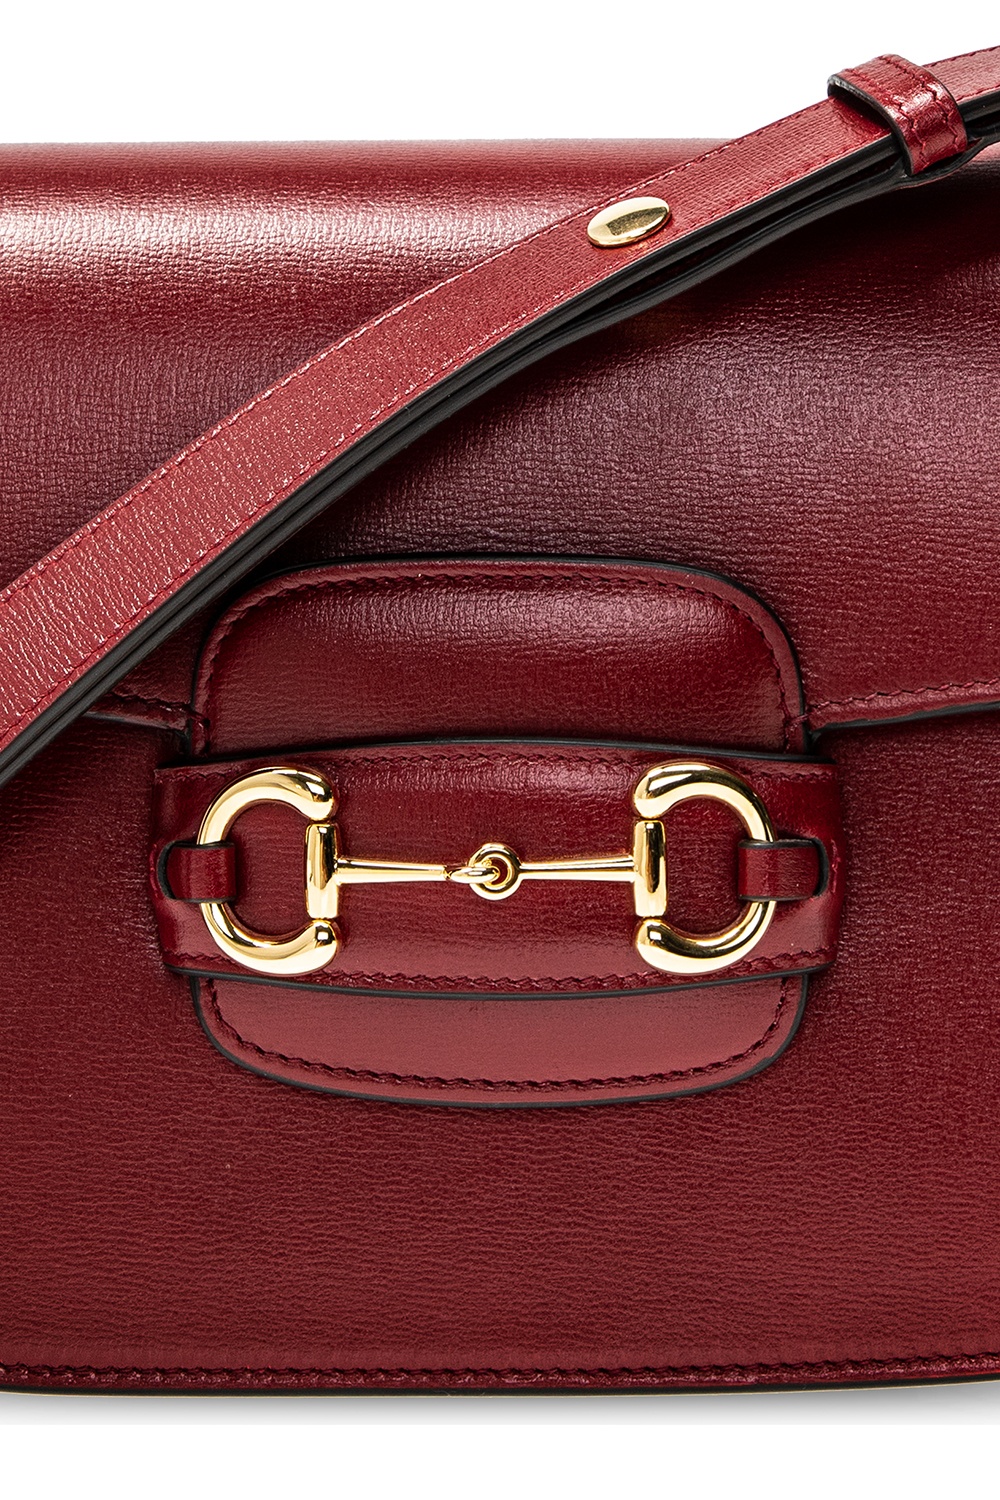 Gucci Gucci 1955 Horsebit Leather Shoulder Bag burgundy